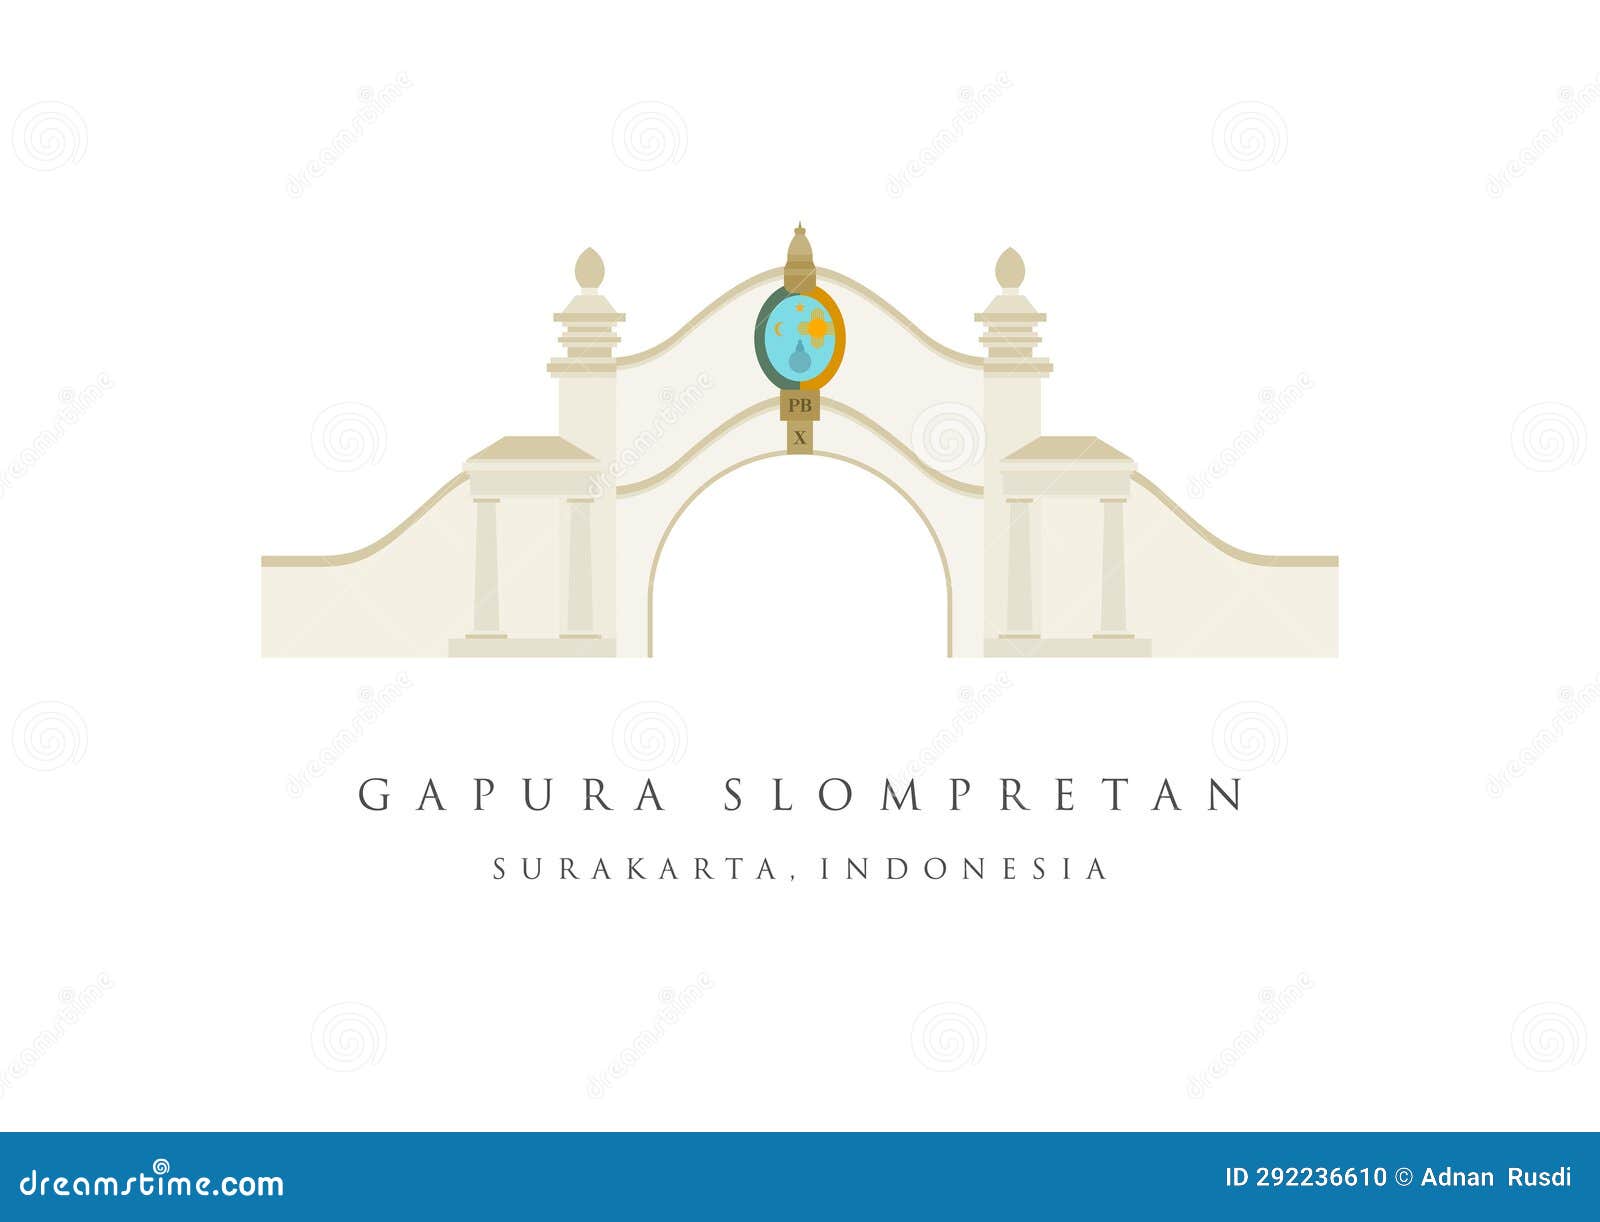 gapura slompretan or gapura pasar klewer surakarta in solo city. surakarta landmark. the landmark icon of solo city, surakarta,